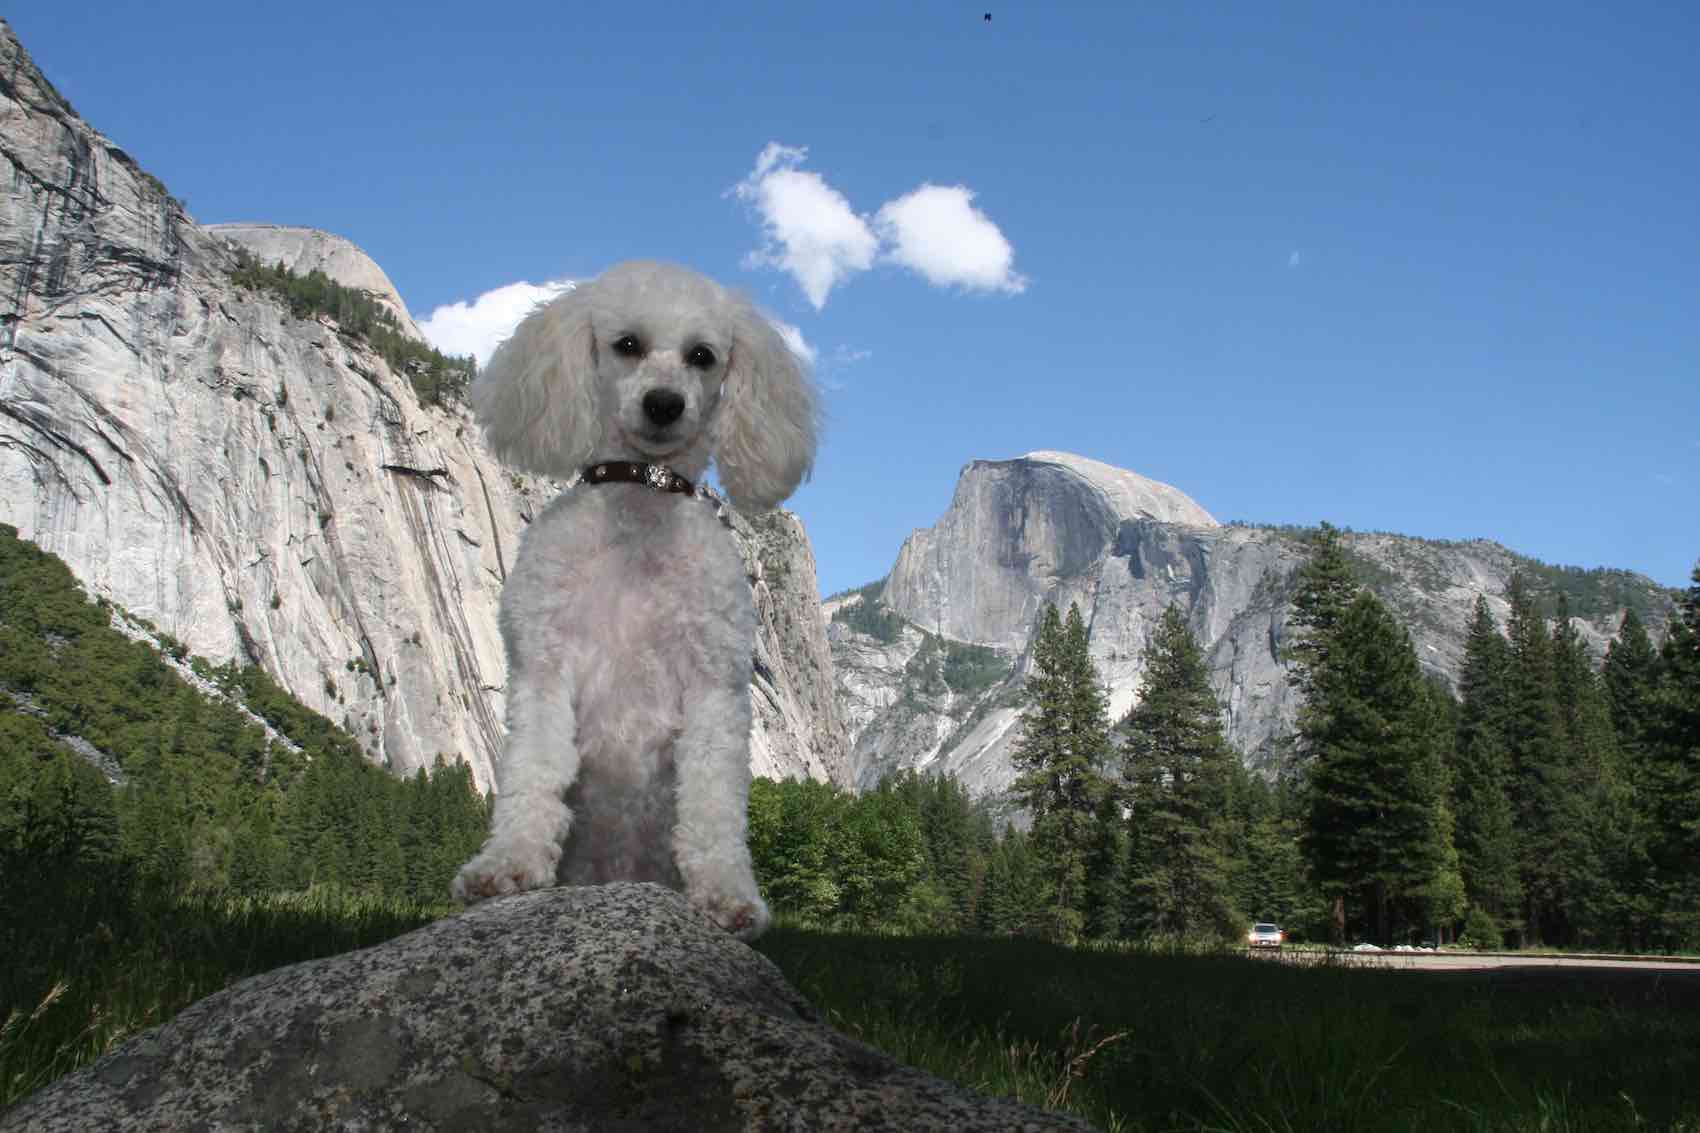 Cordelia visiting Yosemite National Park, photo by: Charlie Kelly